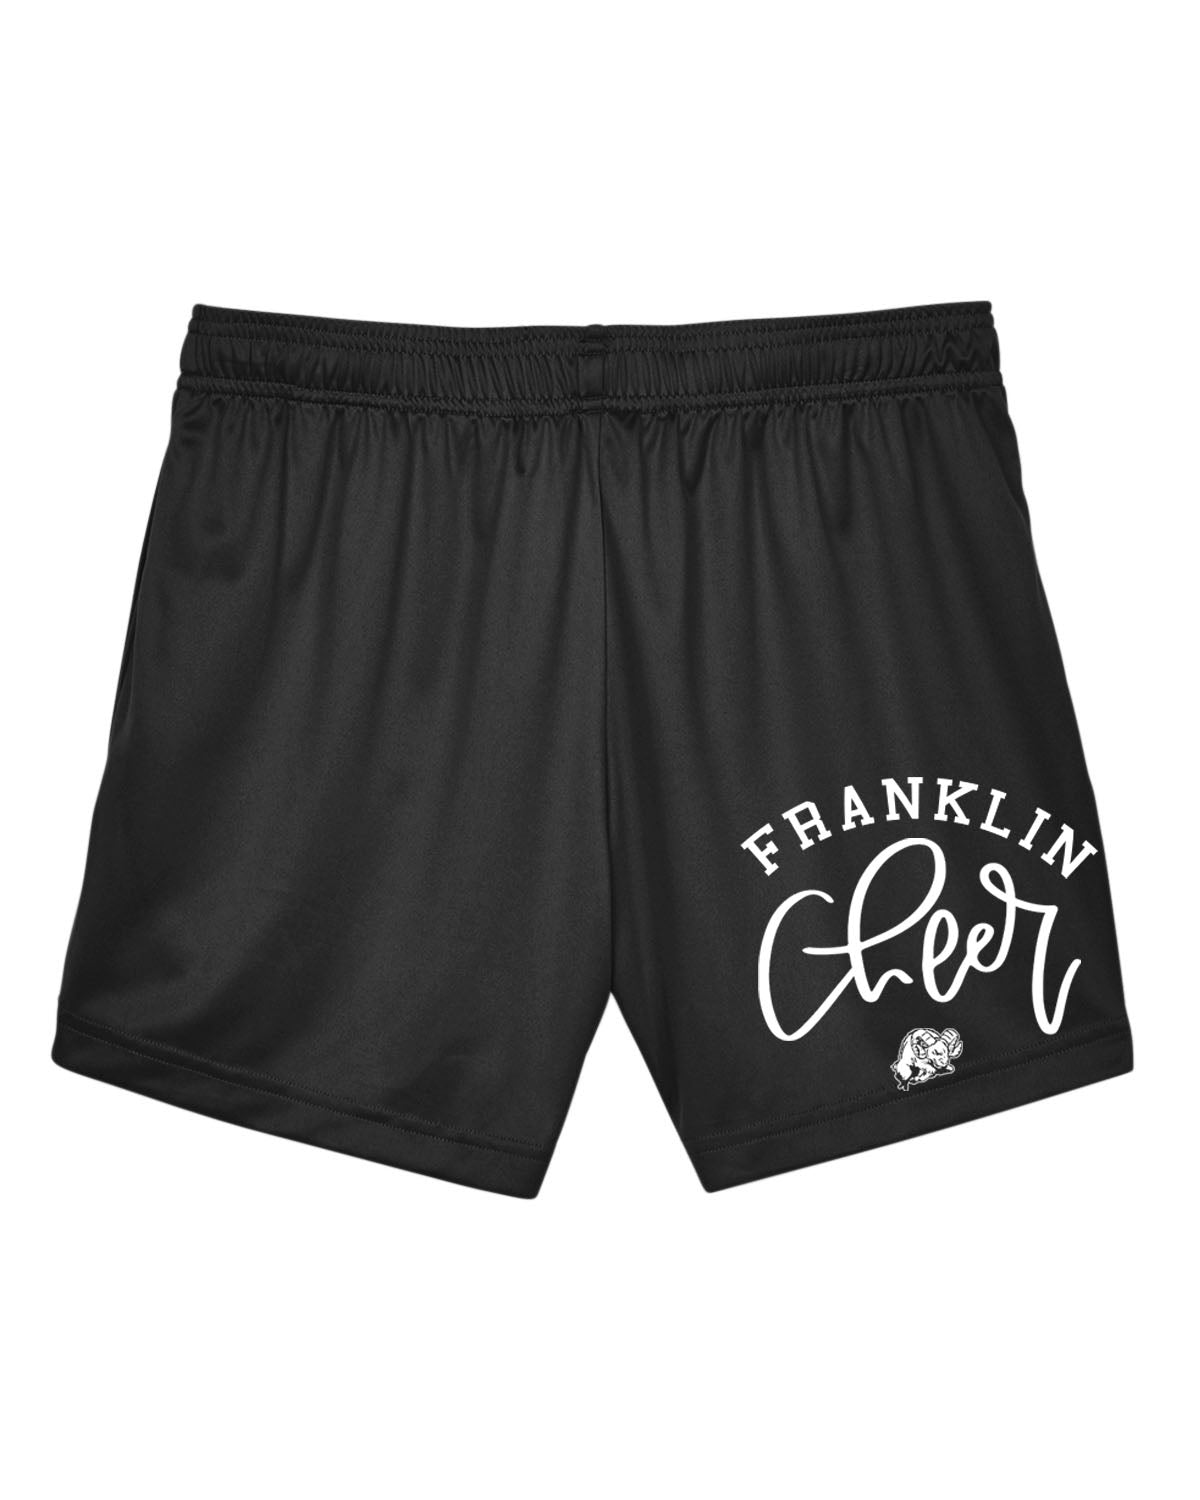 Franklin Cheer Ladies Performance Design 3 Shorts